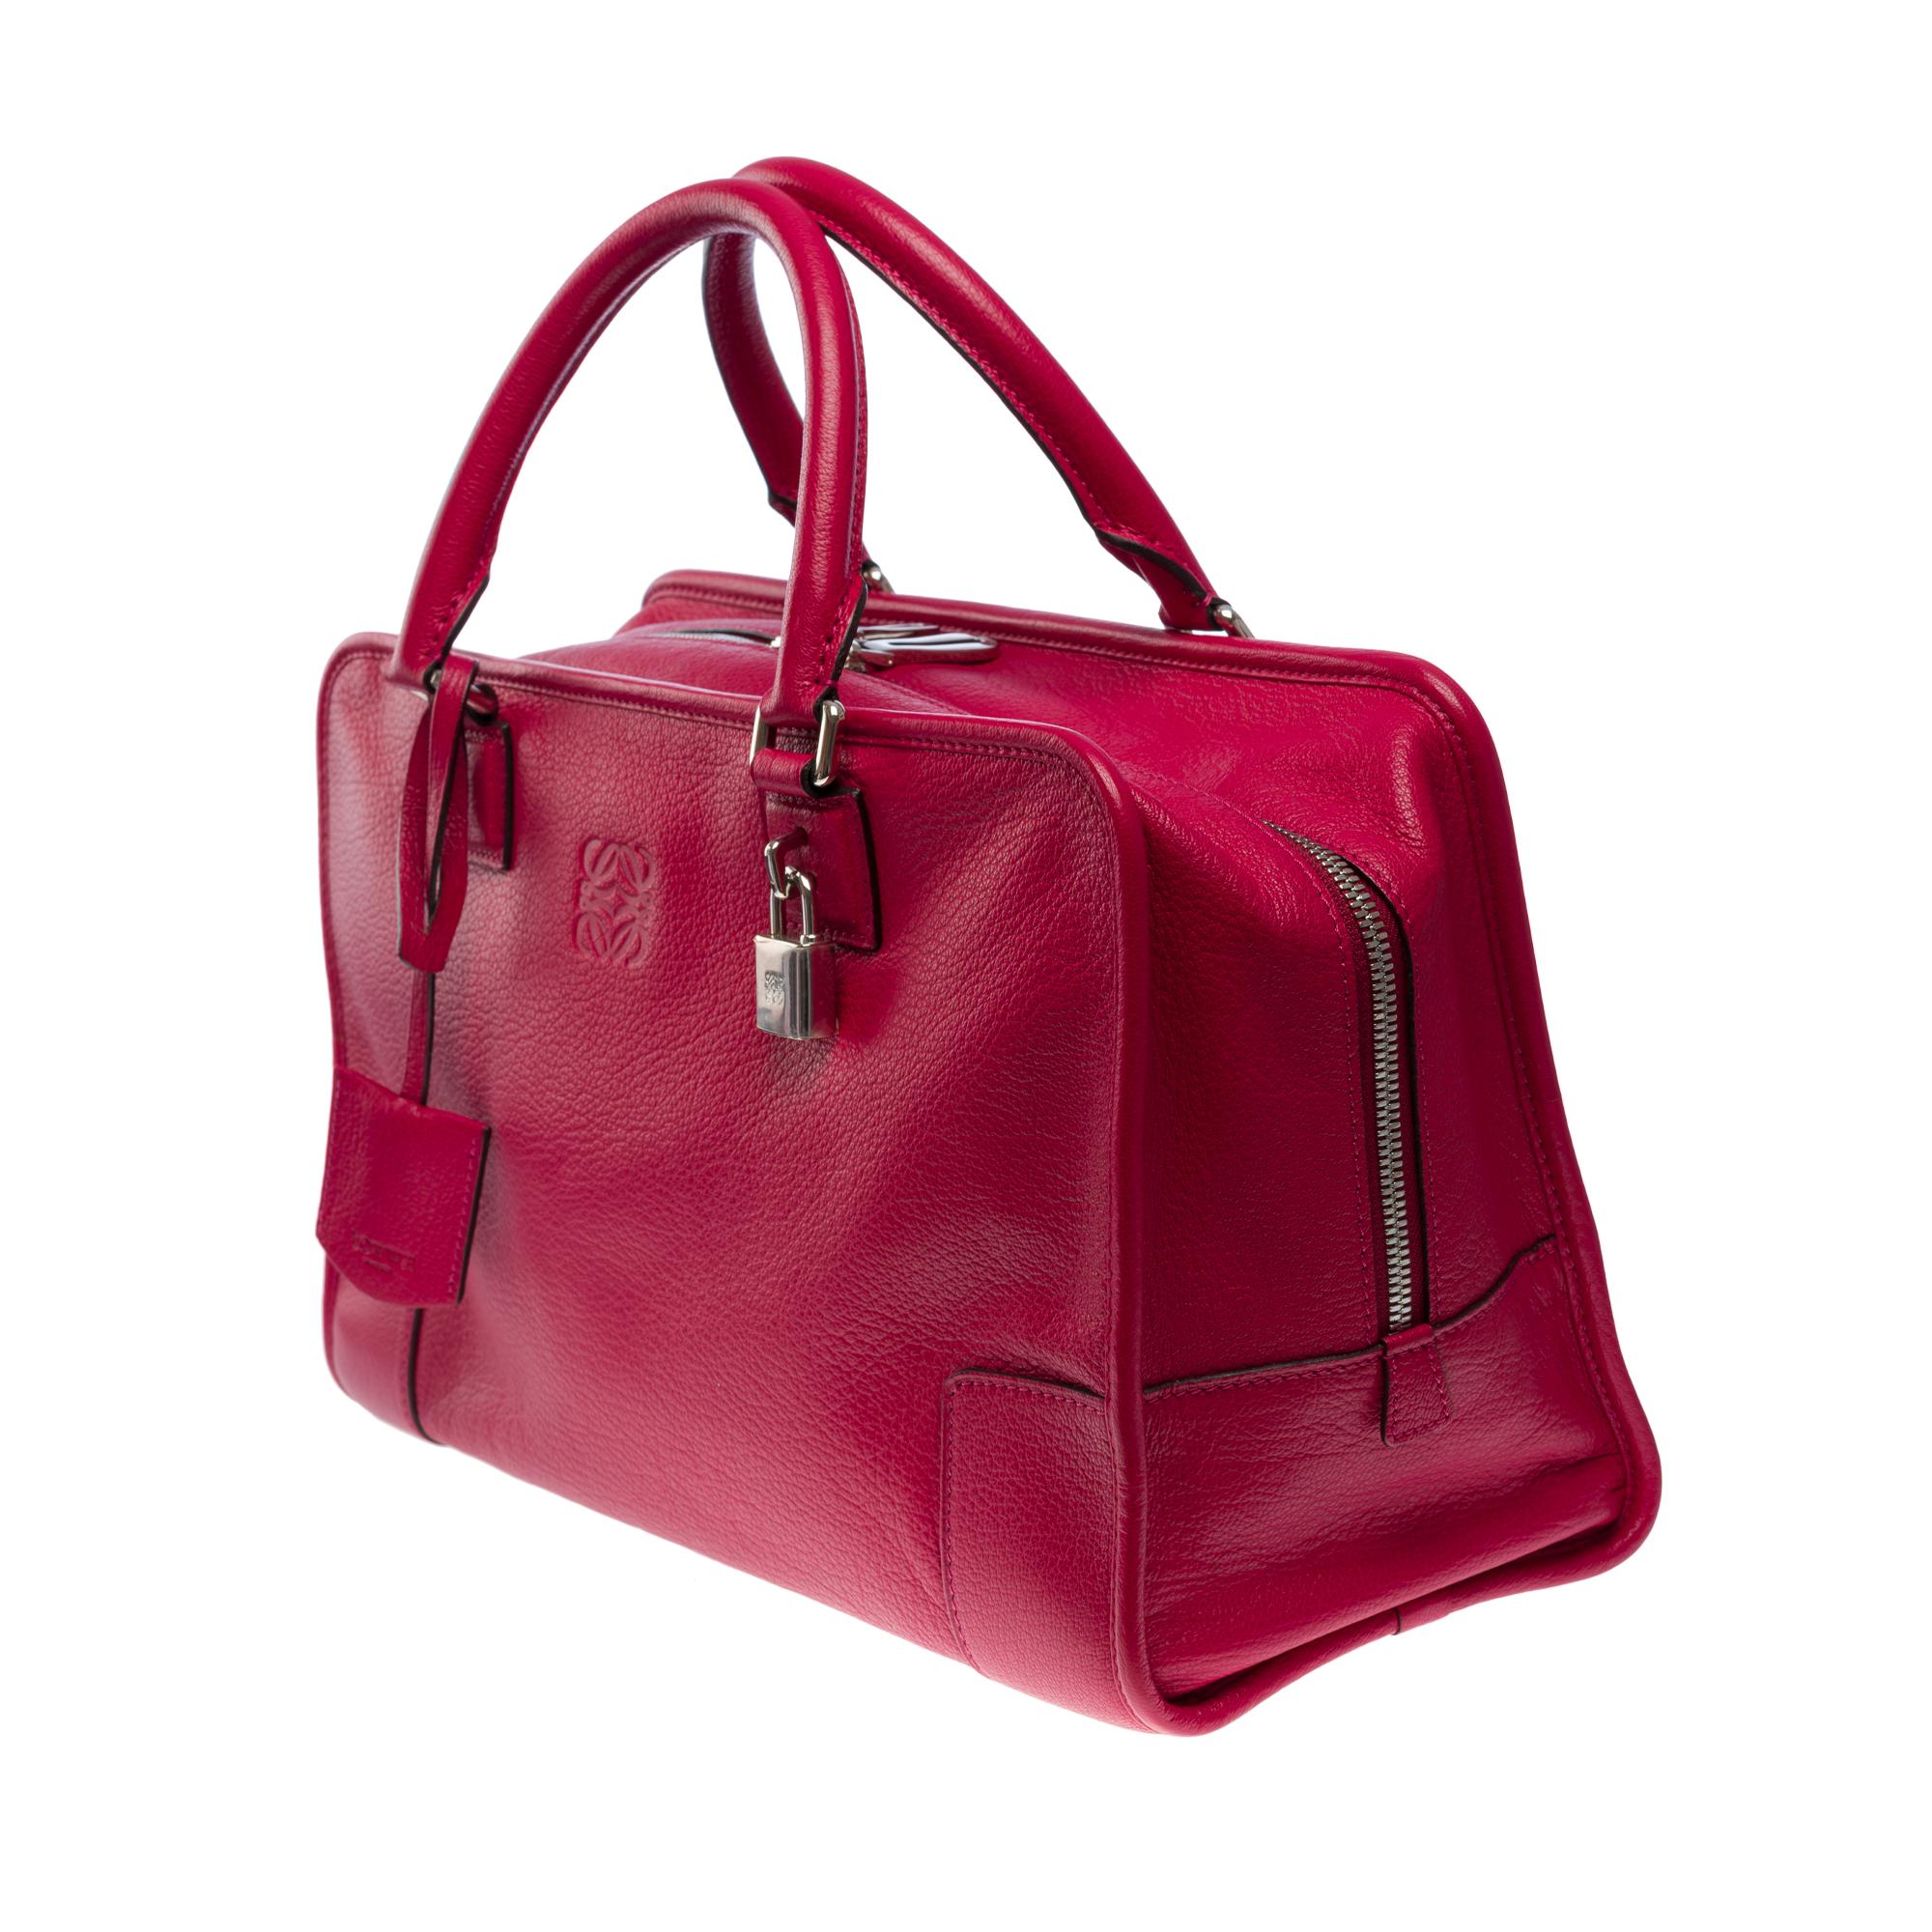 Delightful Loewe Amazona 36 (GM) handbag in red leather, SHW For Sale 1